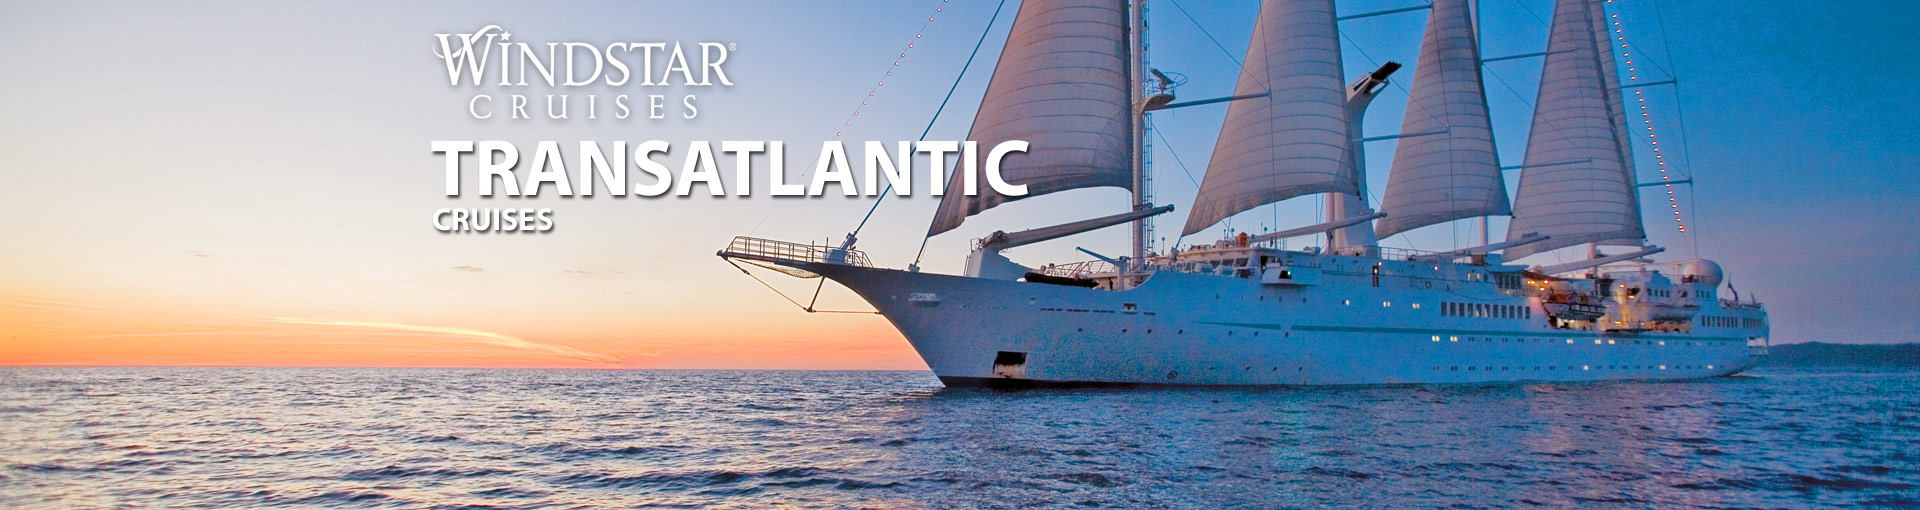 Windstar Transatlantic Cruises